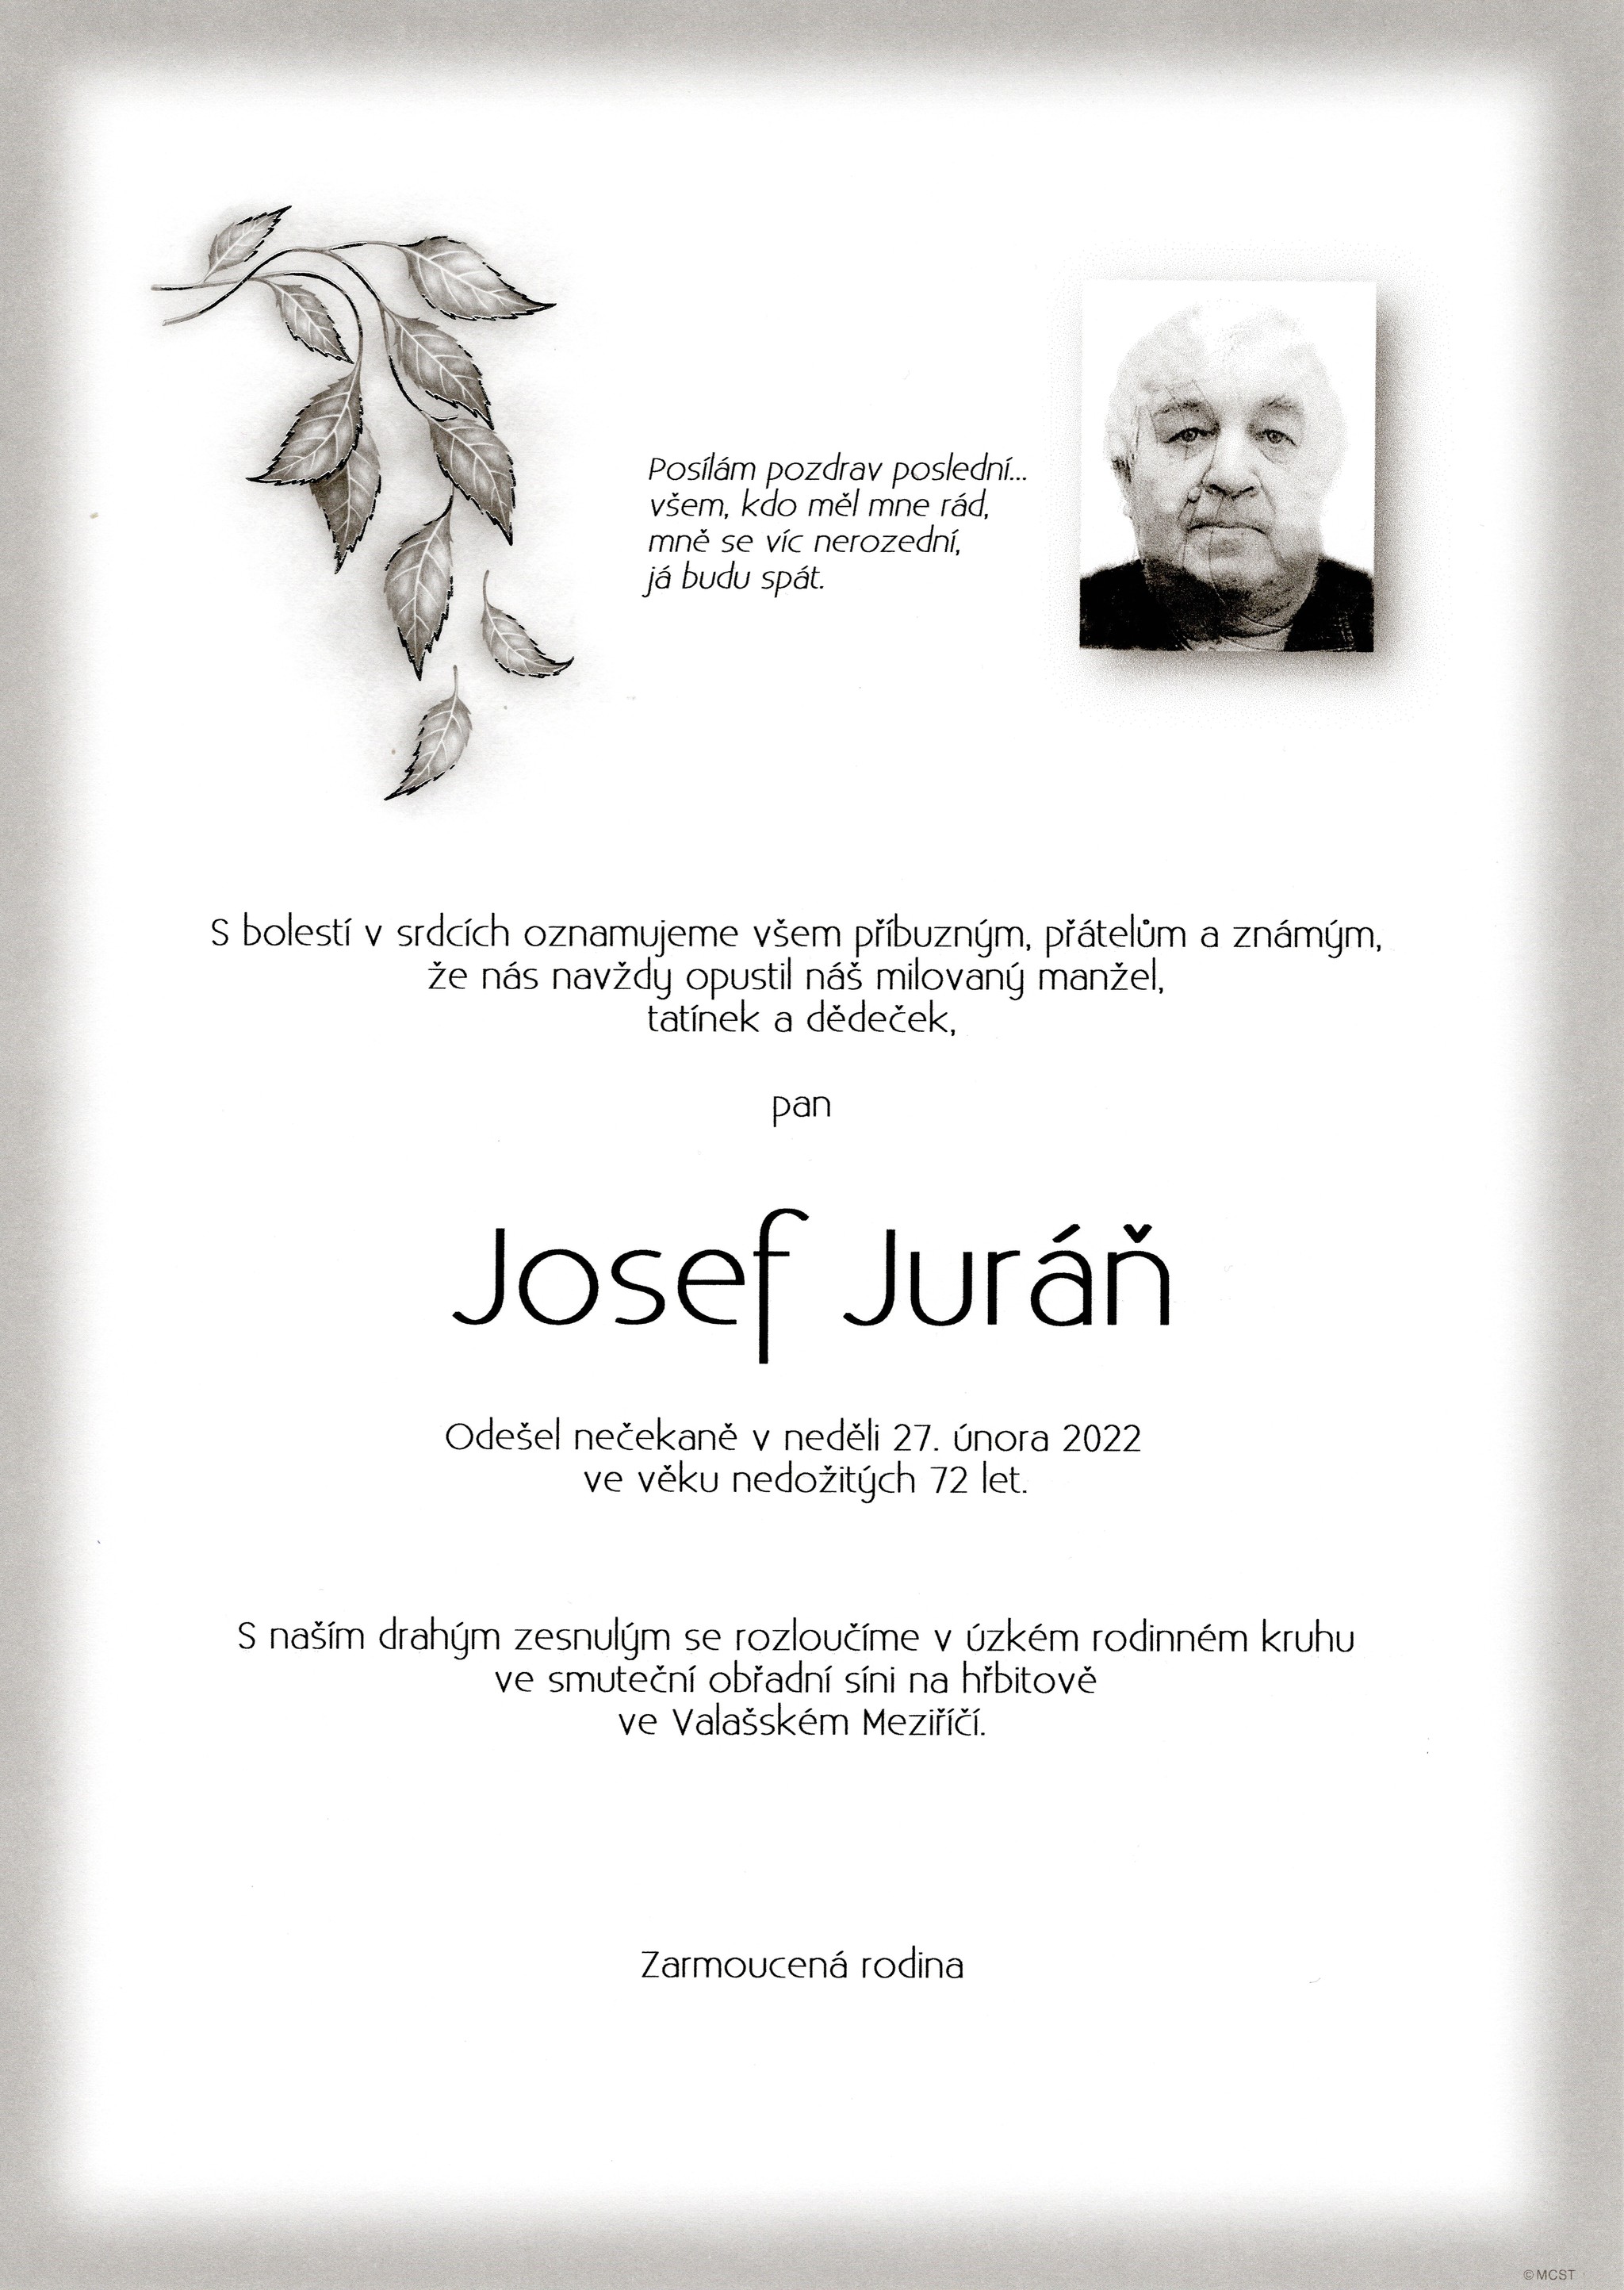 Josef Juráň